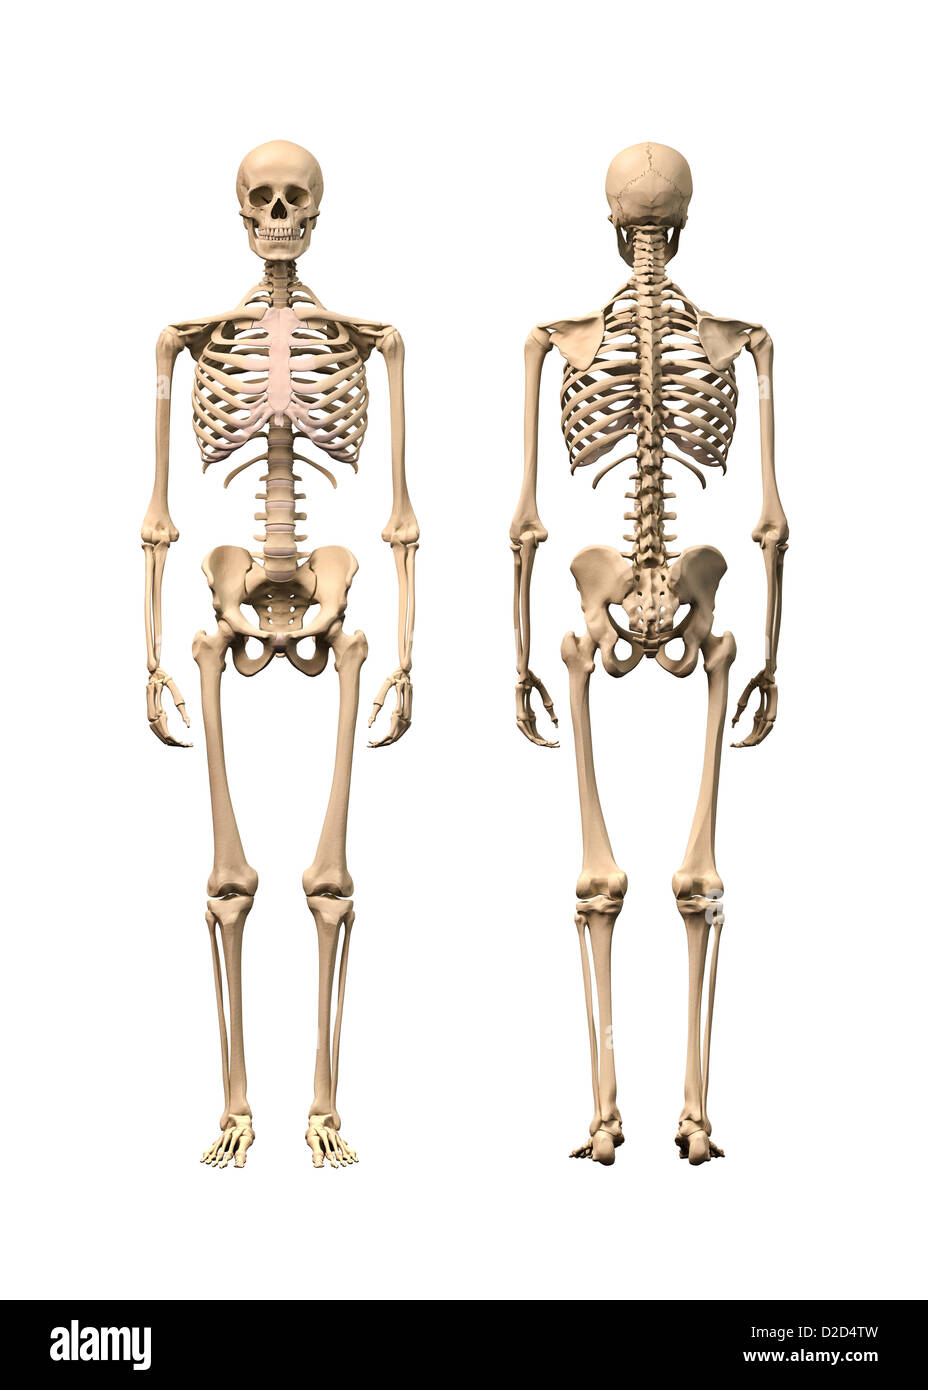 Human skeleton computer artwork Stock Photo